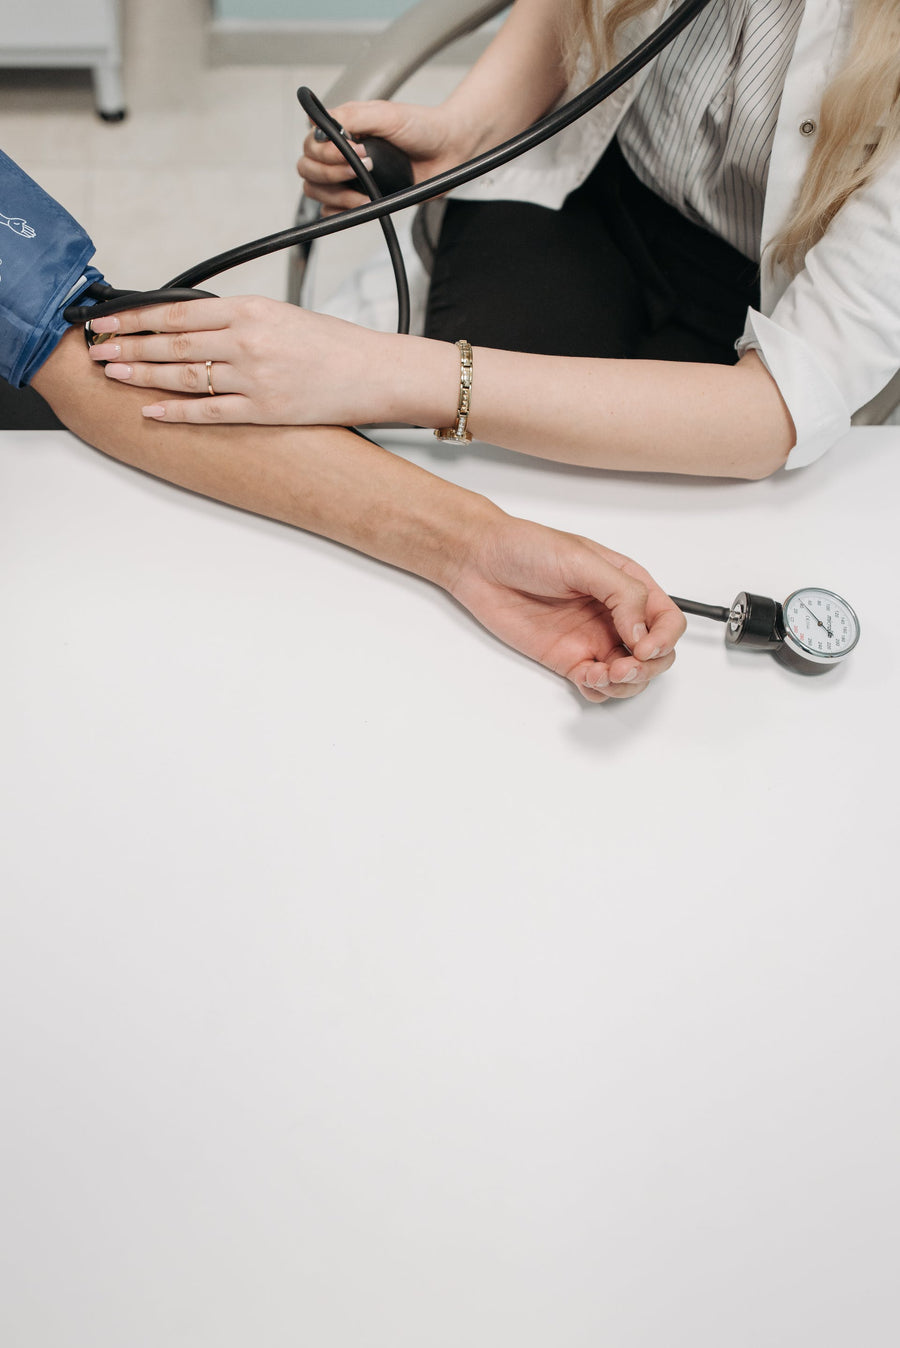 woman getting a blood pressure test